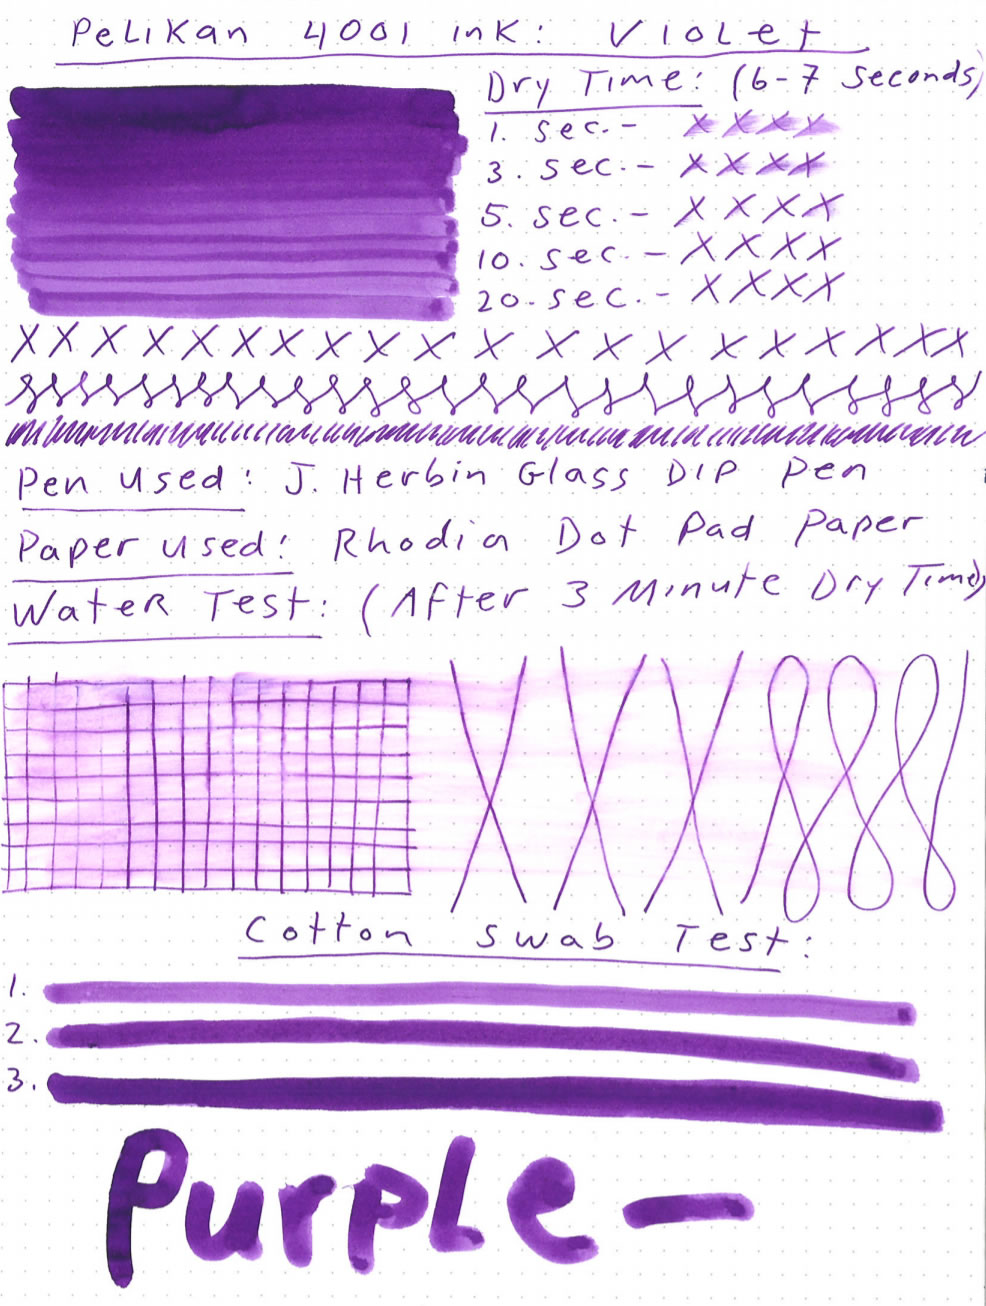 https://www.penchalet.com/blog/wp-content/uploads/2019/09/Pelikan-4001-Violet-Ink-Review.jpg